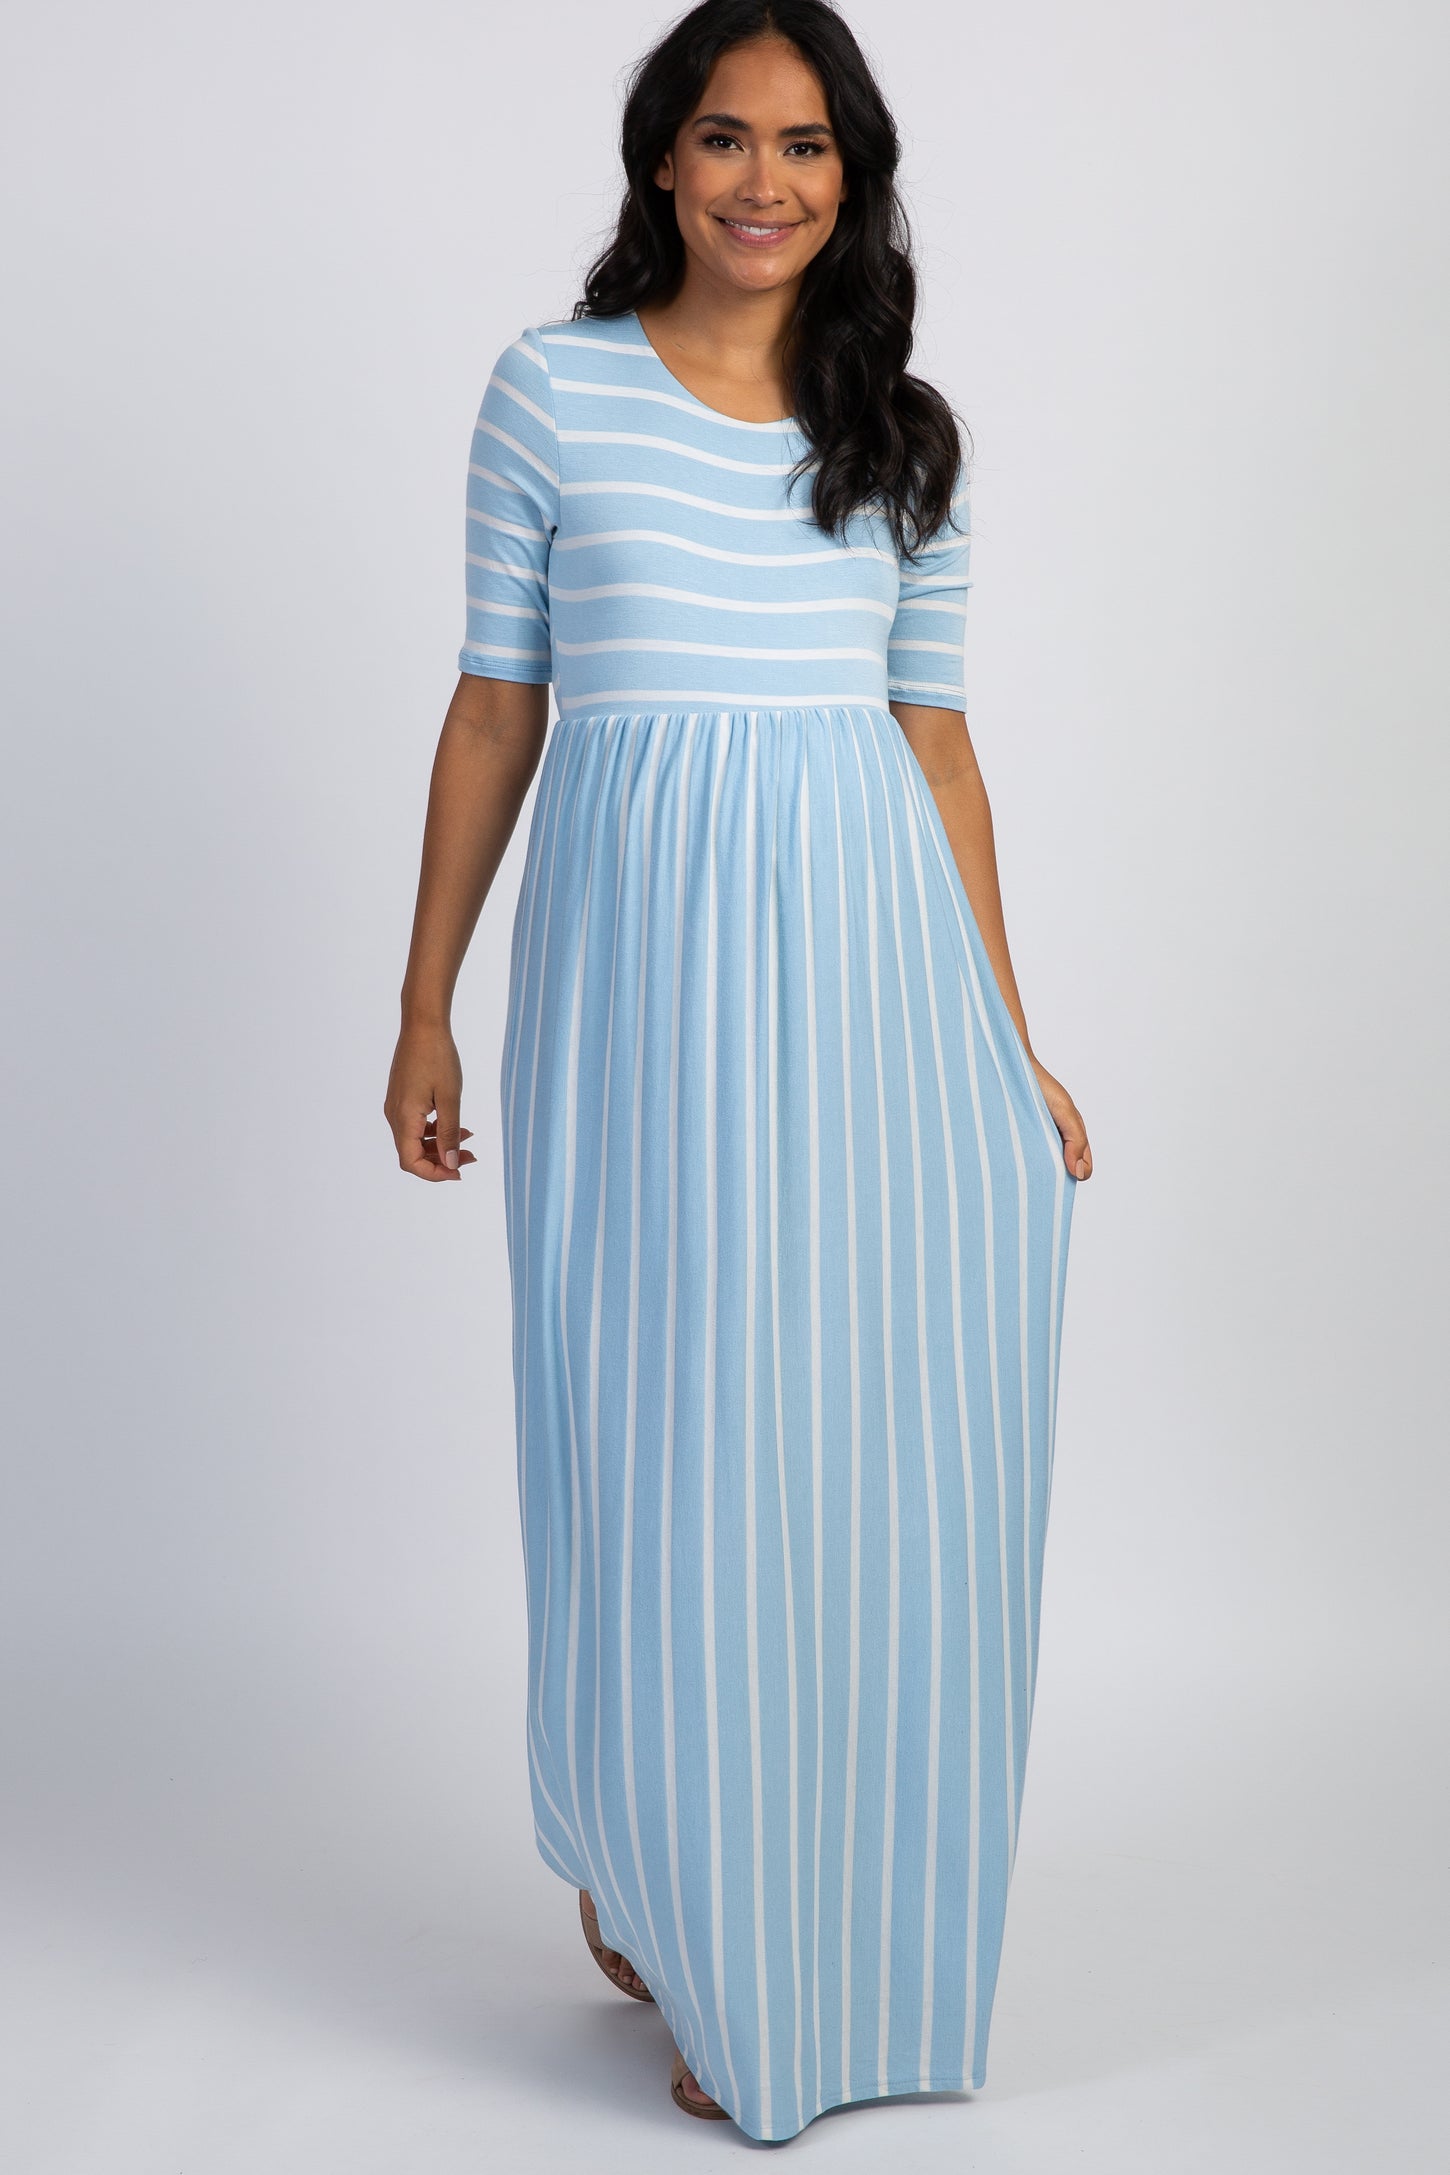 PinkBlush Light Blue Striped Half Sleeve Maternity Maxi Dress